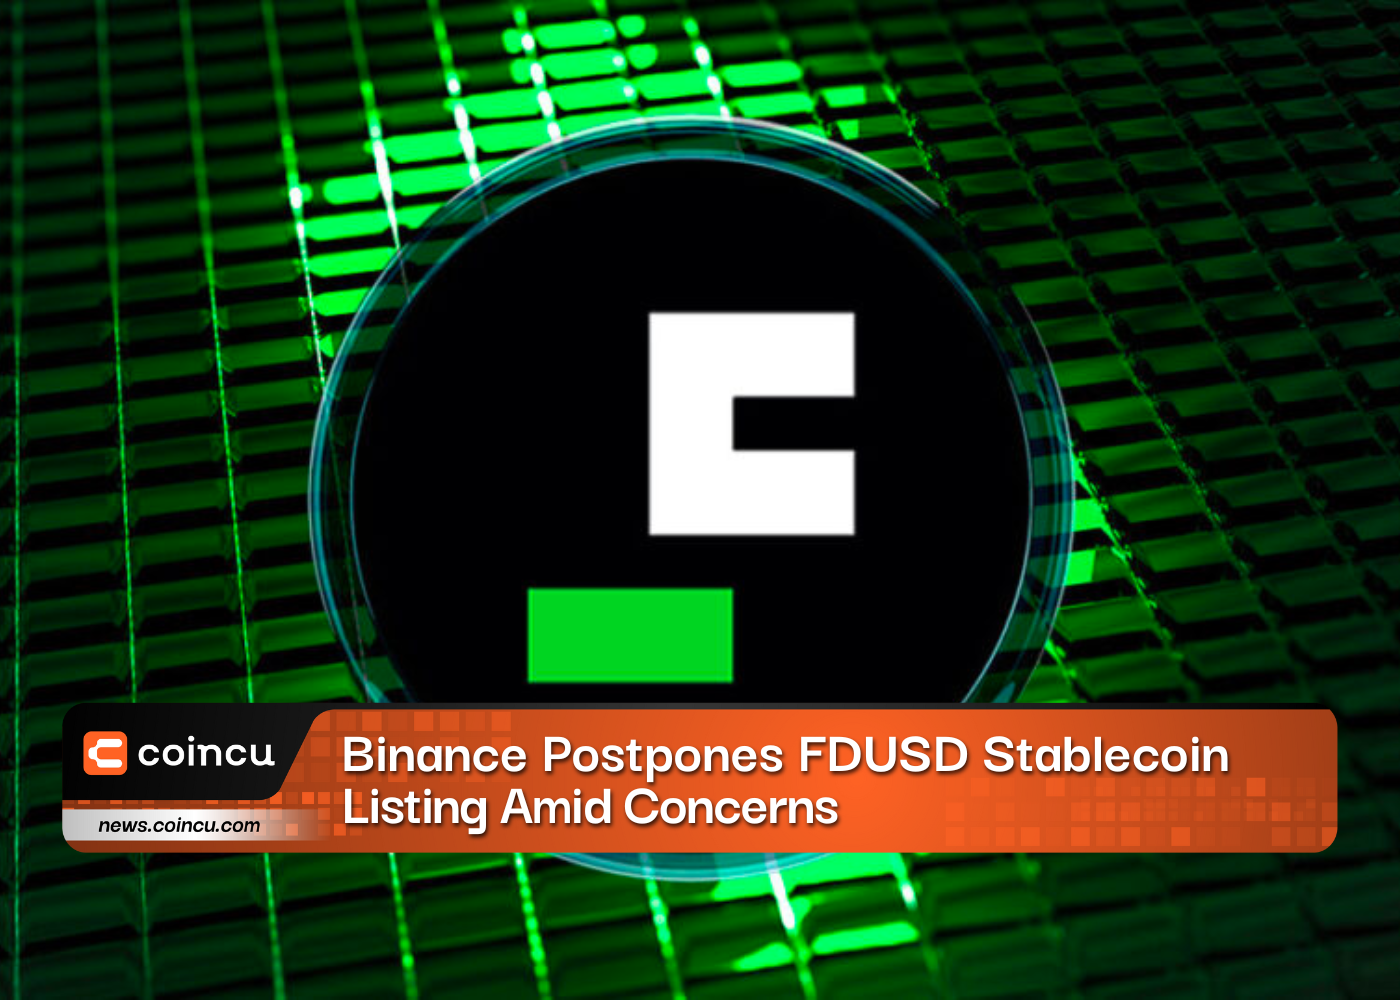 Binance Postpones FDUSD Stablecoin